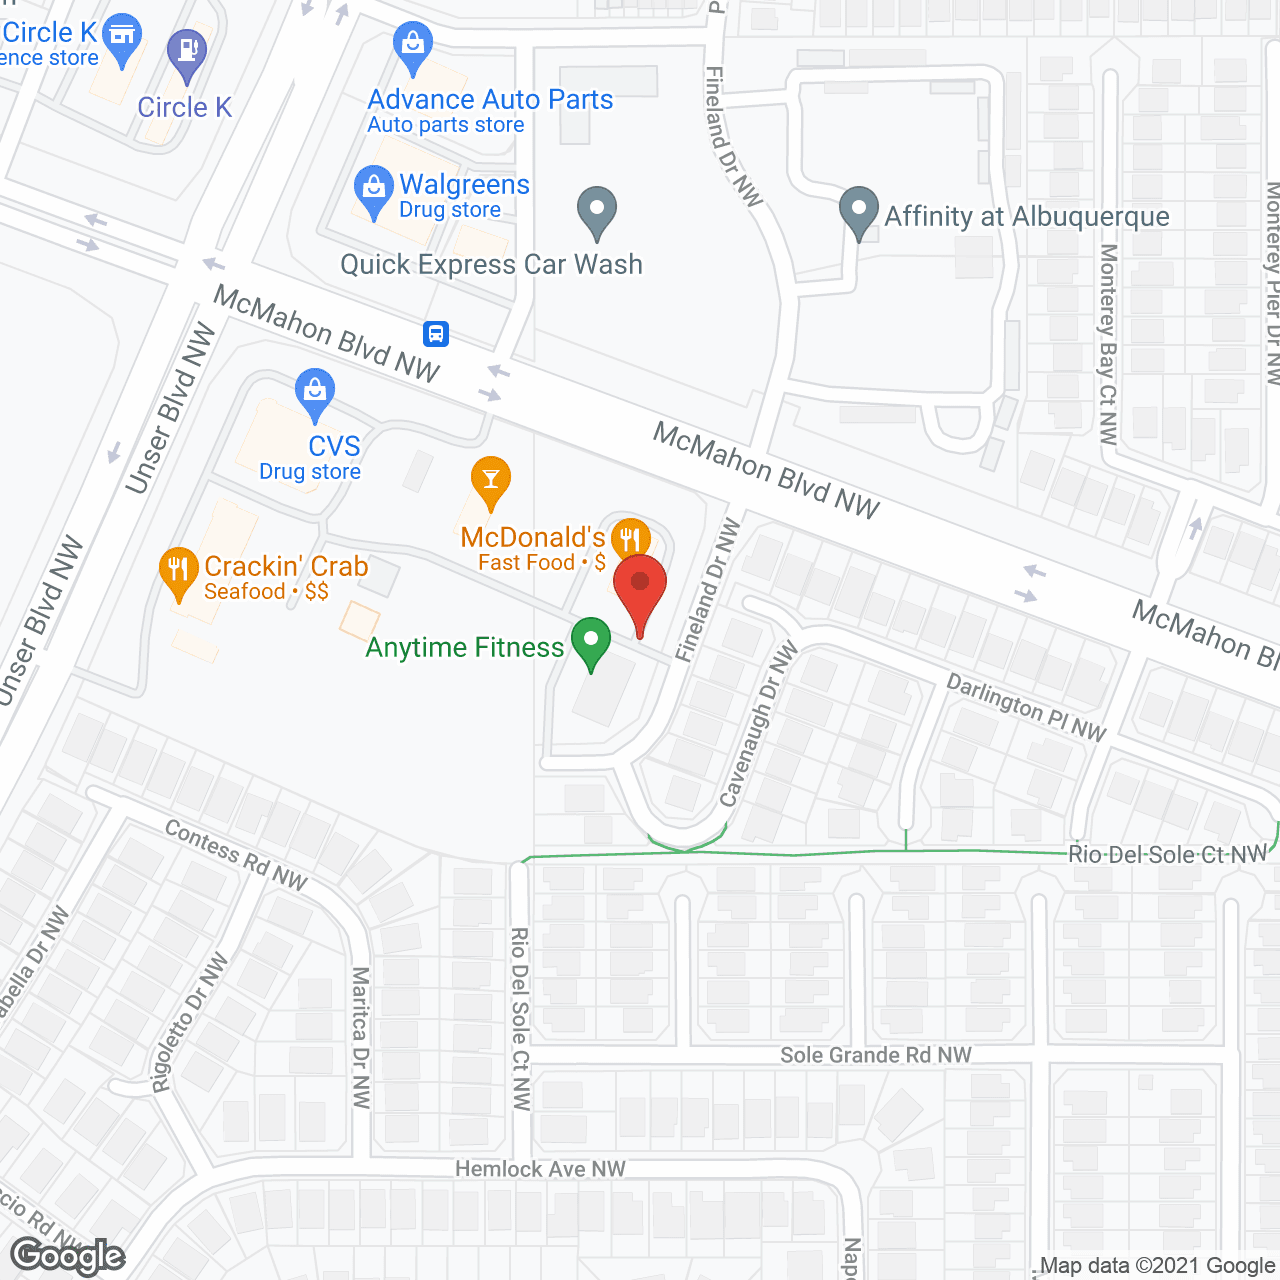 Affinity at Albuquerque in google map